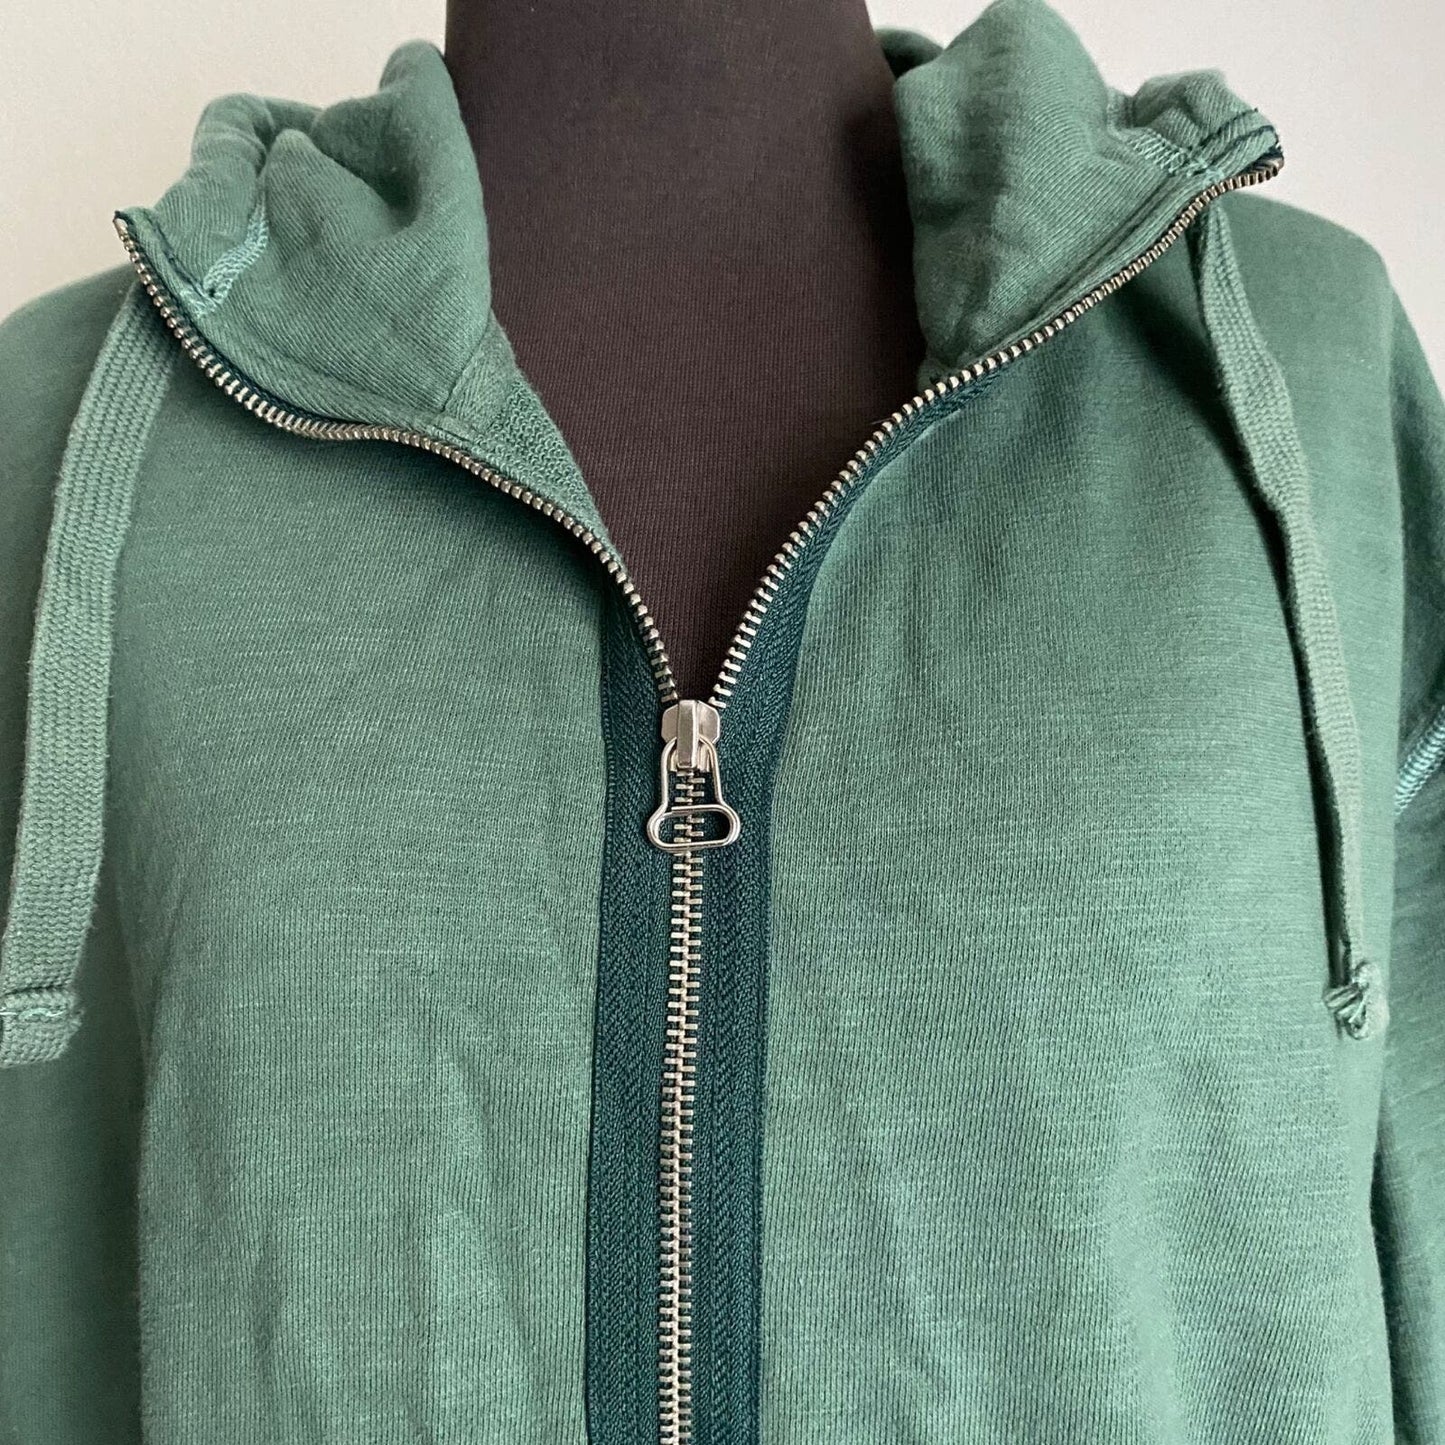 Gap sz S Cotton hooded zip sweatshirt draw string hoodie